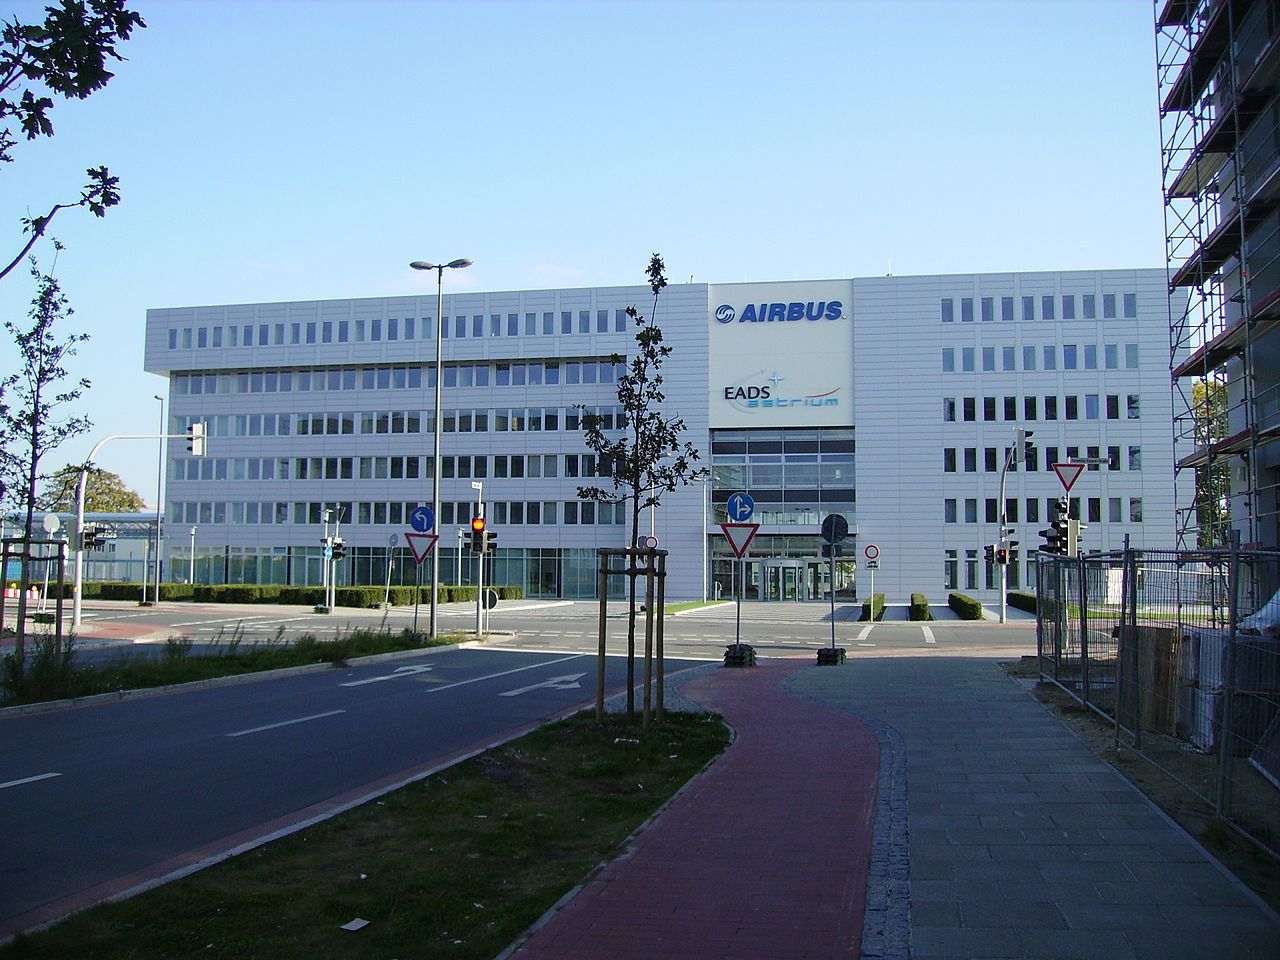 Airbus EADS building in Bremen